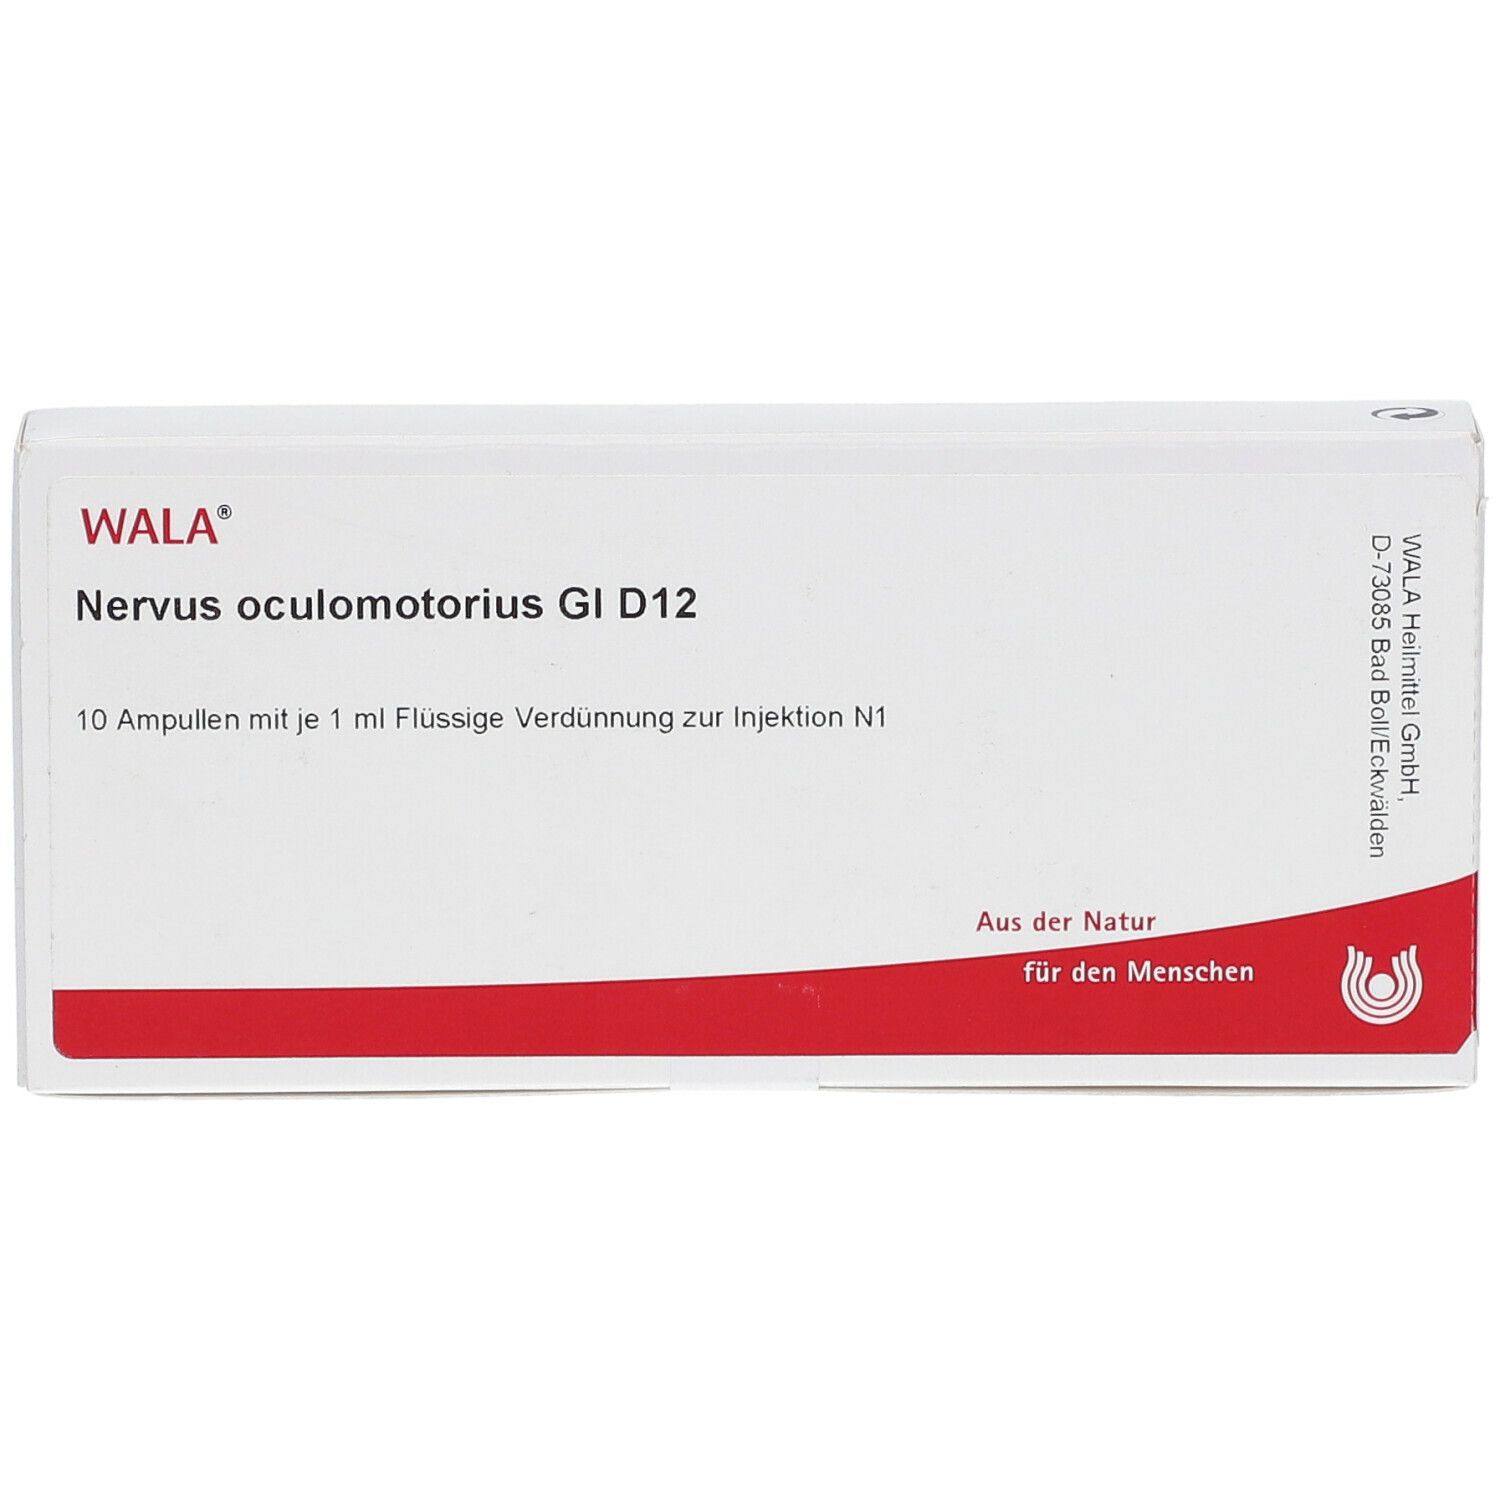 WALA® Nervus oculomotorius Gl D 12